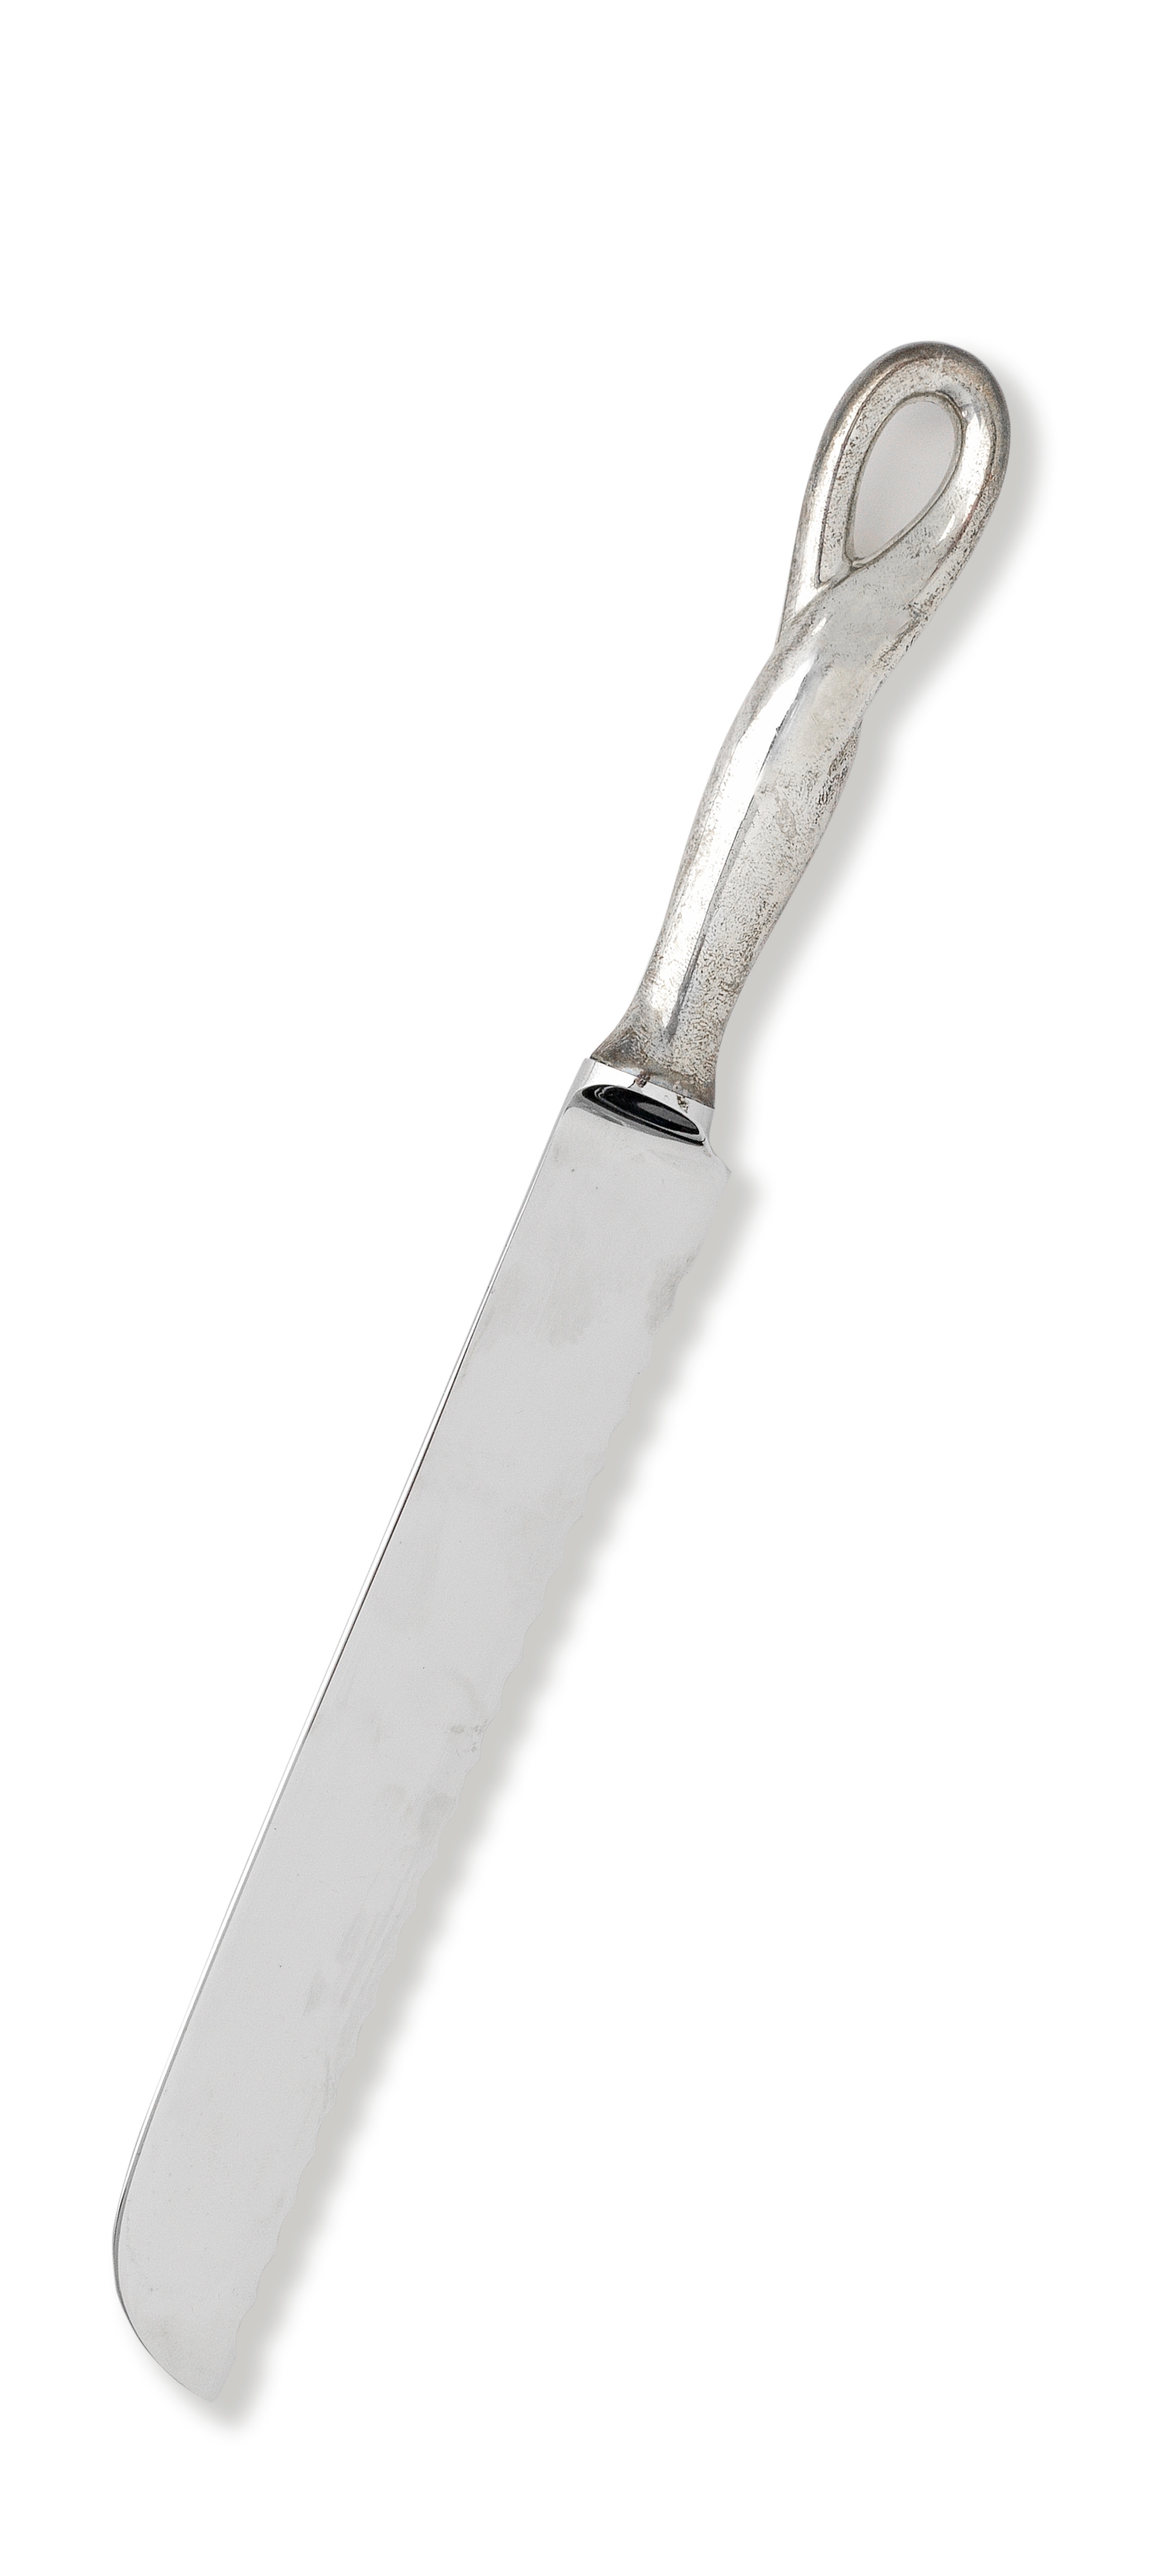 A Tiffany silver bread knife Mark of Tiffany & Co., Sterling, Italy, 1984, designed by Elsa Peretti